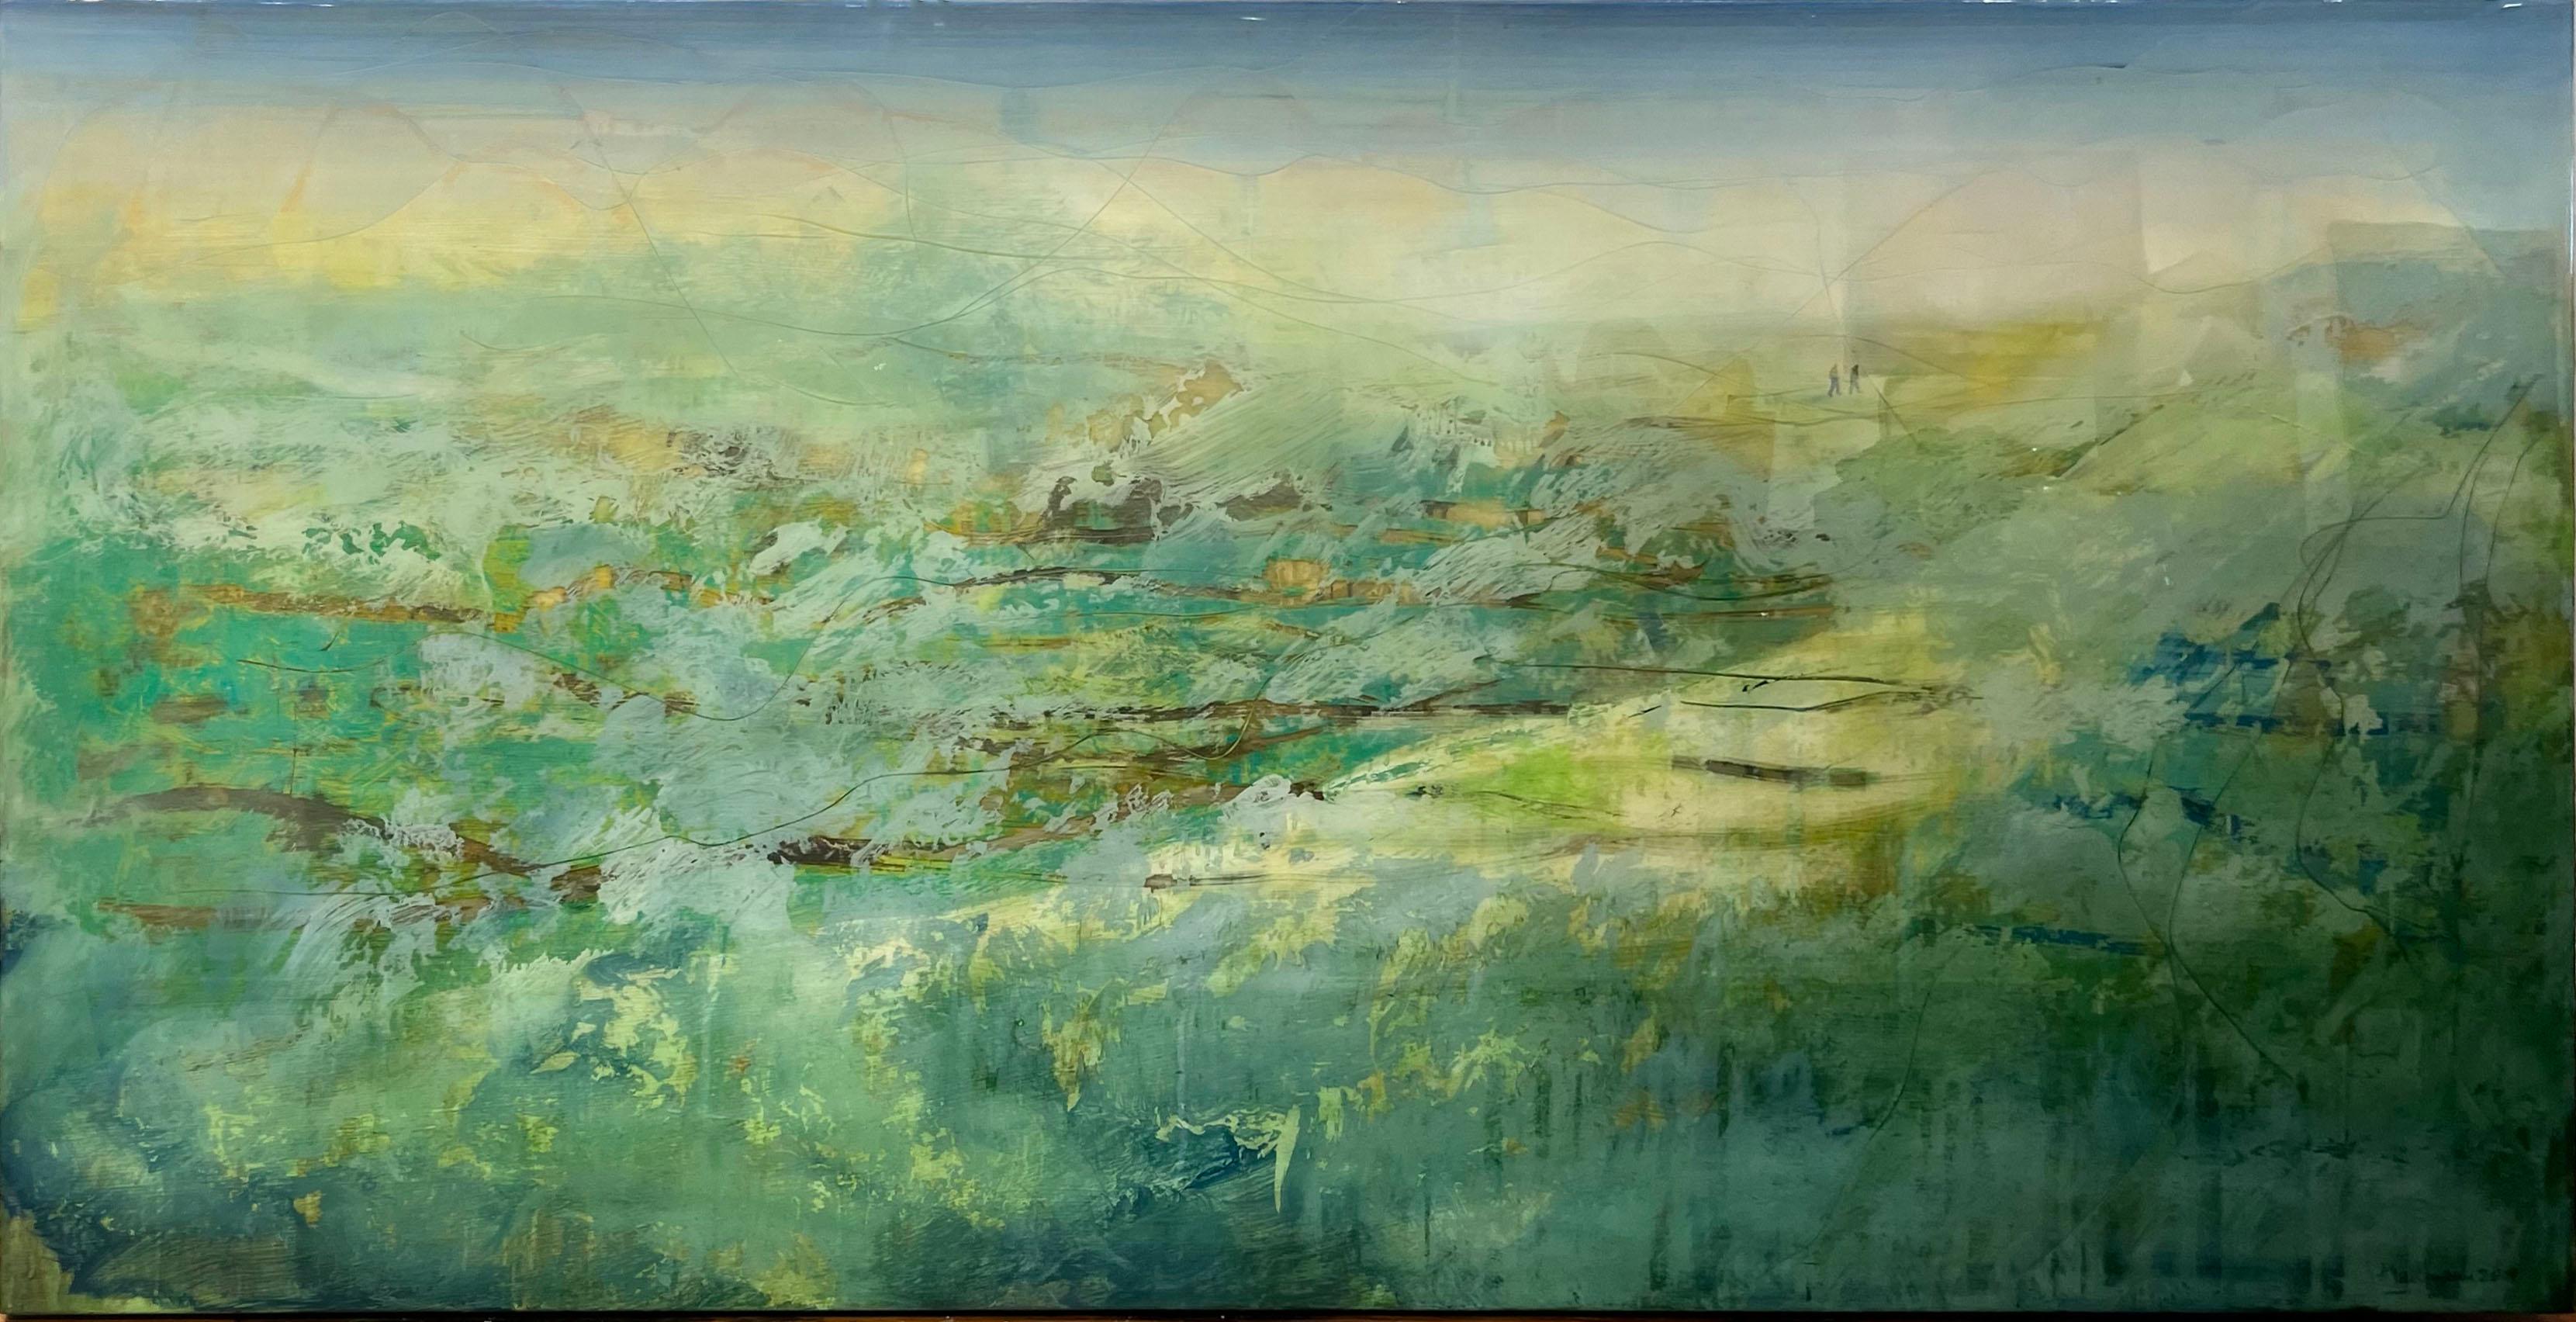 FARAWAY LAND - Painting by Arturo Mallmann